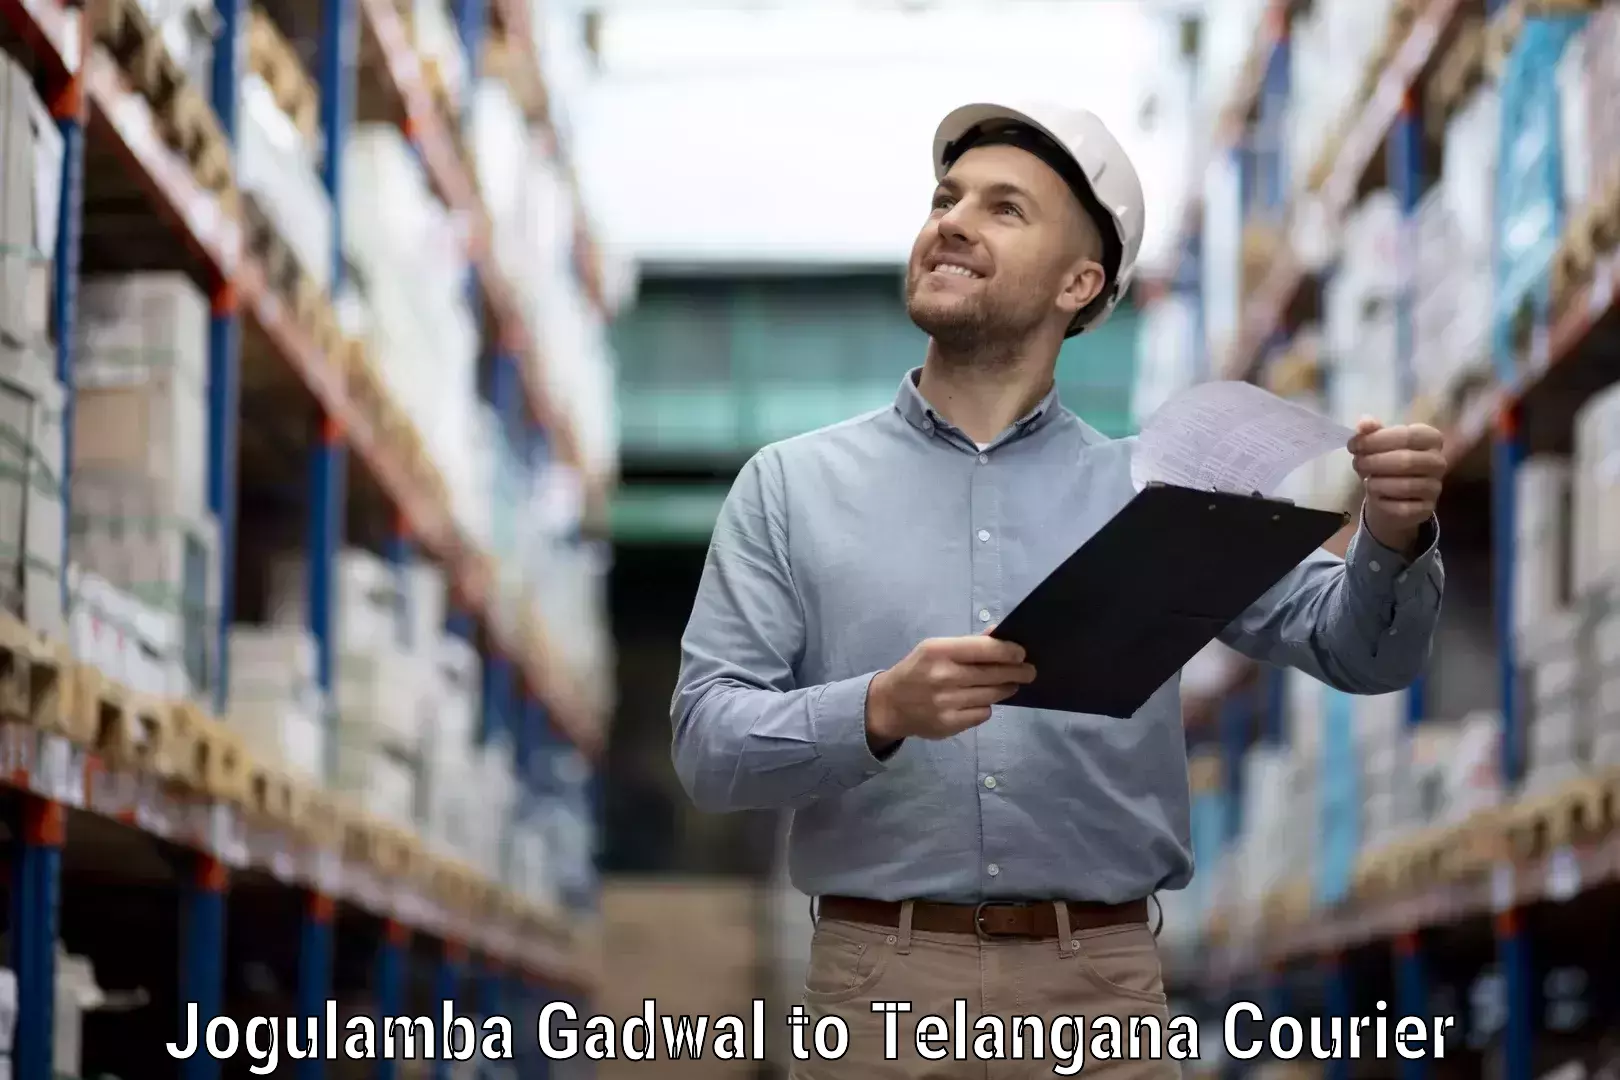 Courier service booking Jogulamba Gadwal to Mancherial